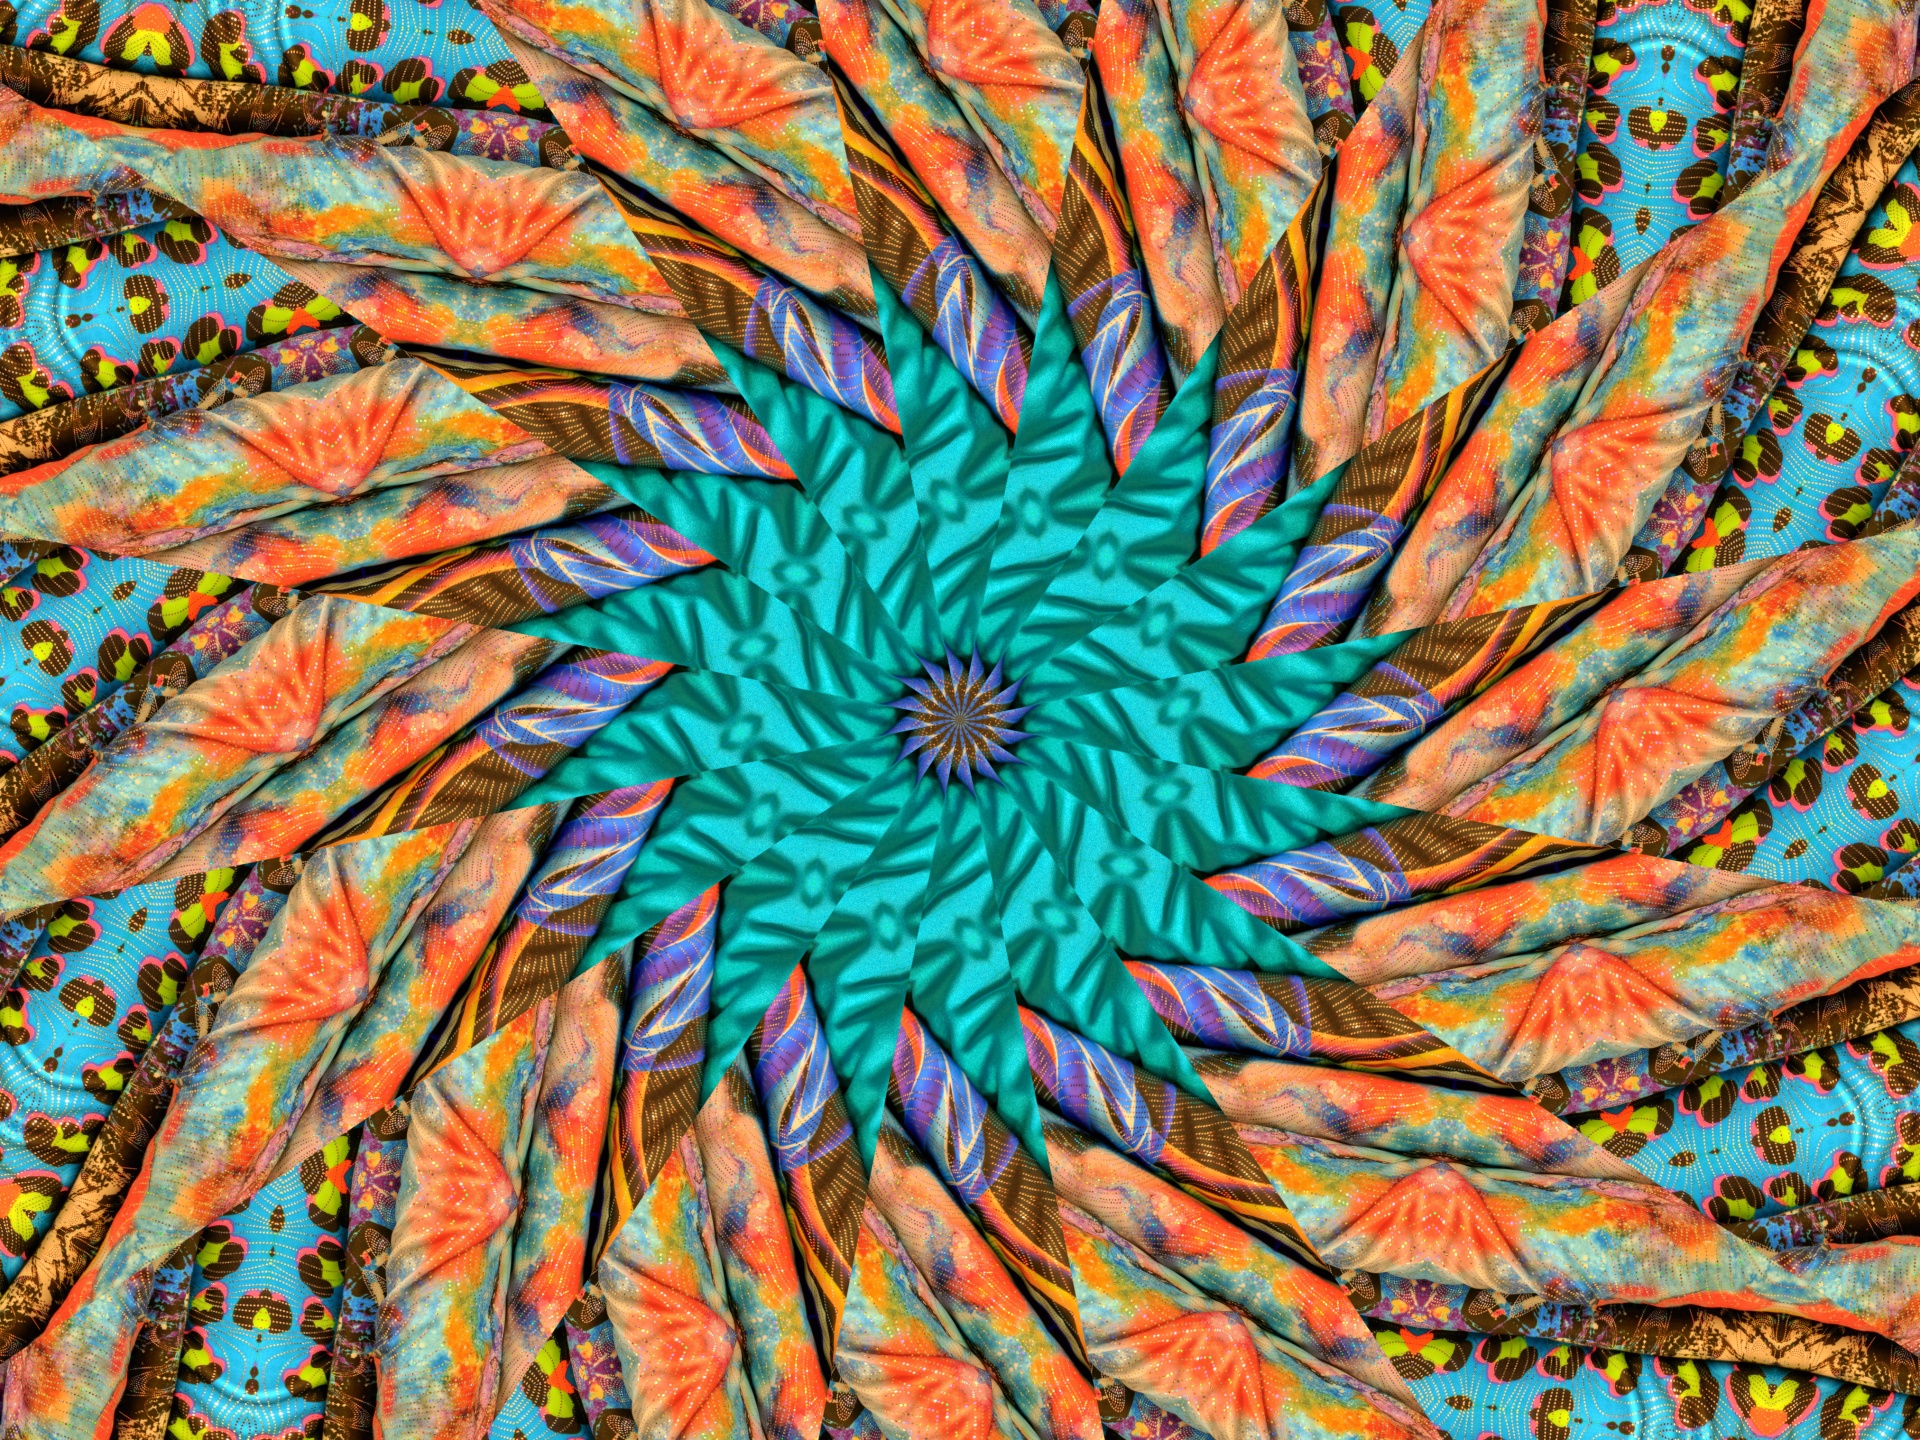 Spiral Kaleidoscope Background